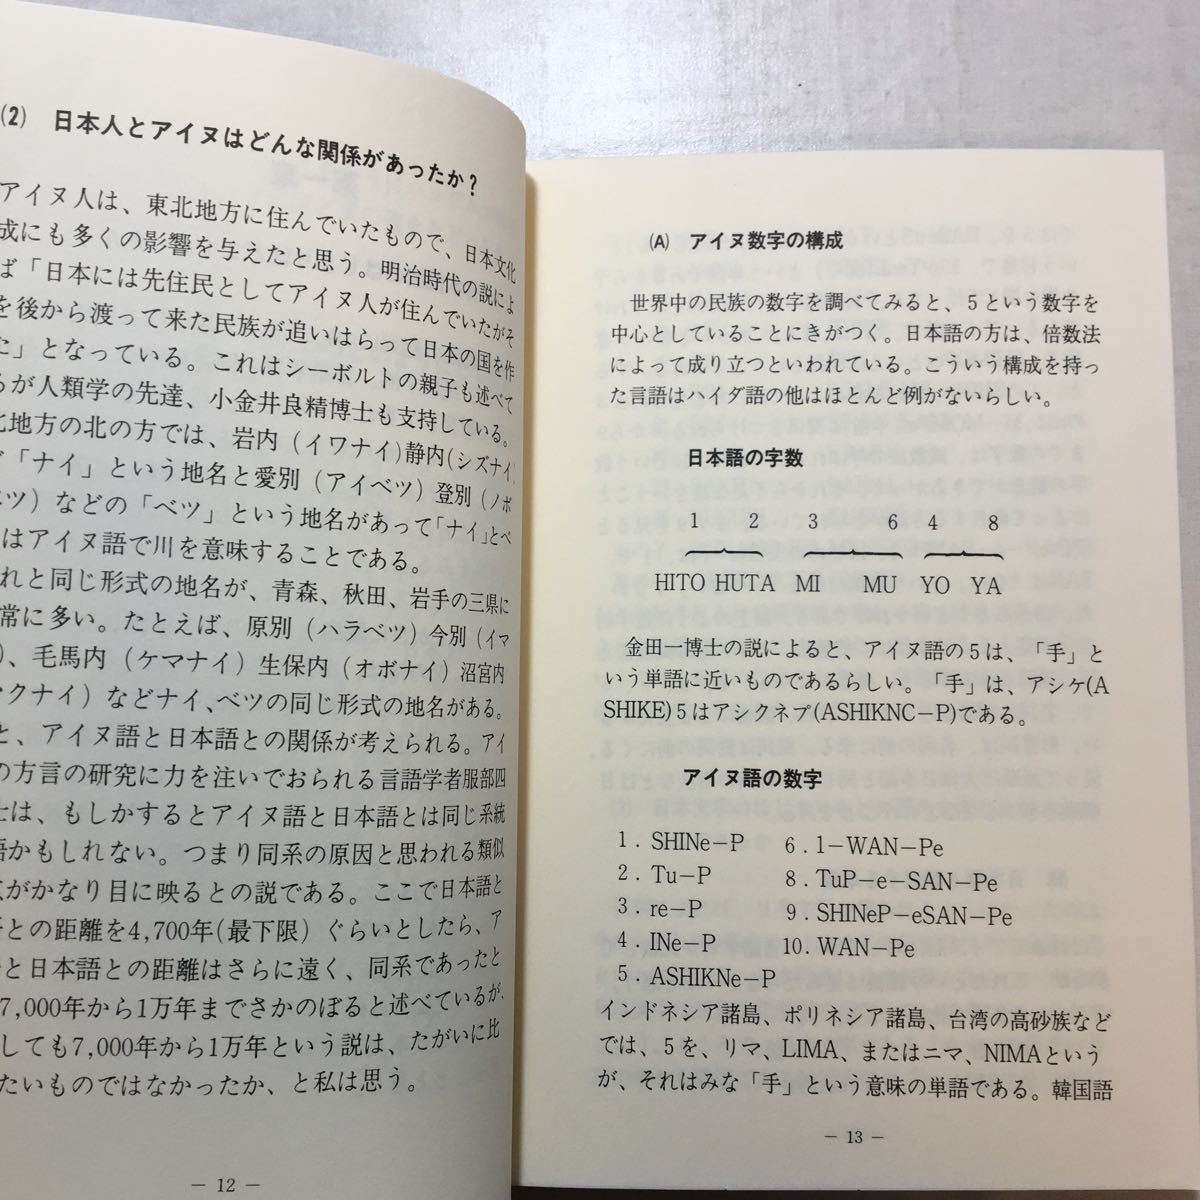 zaa-256♪ハングルとカナは姉妹文字である　崔灌植(著)　1985/1/1　ソウル交通社(発行)